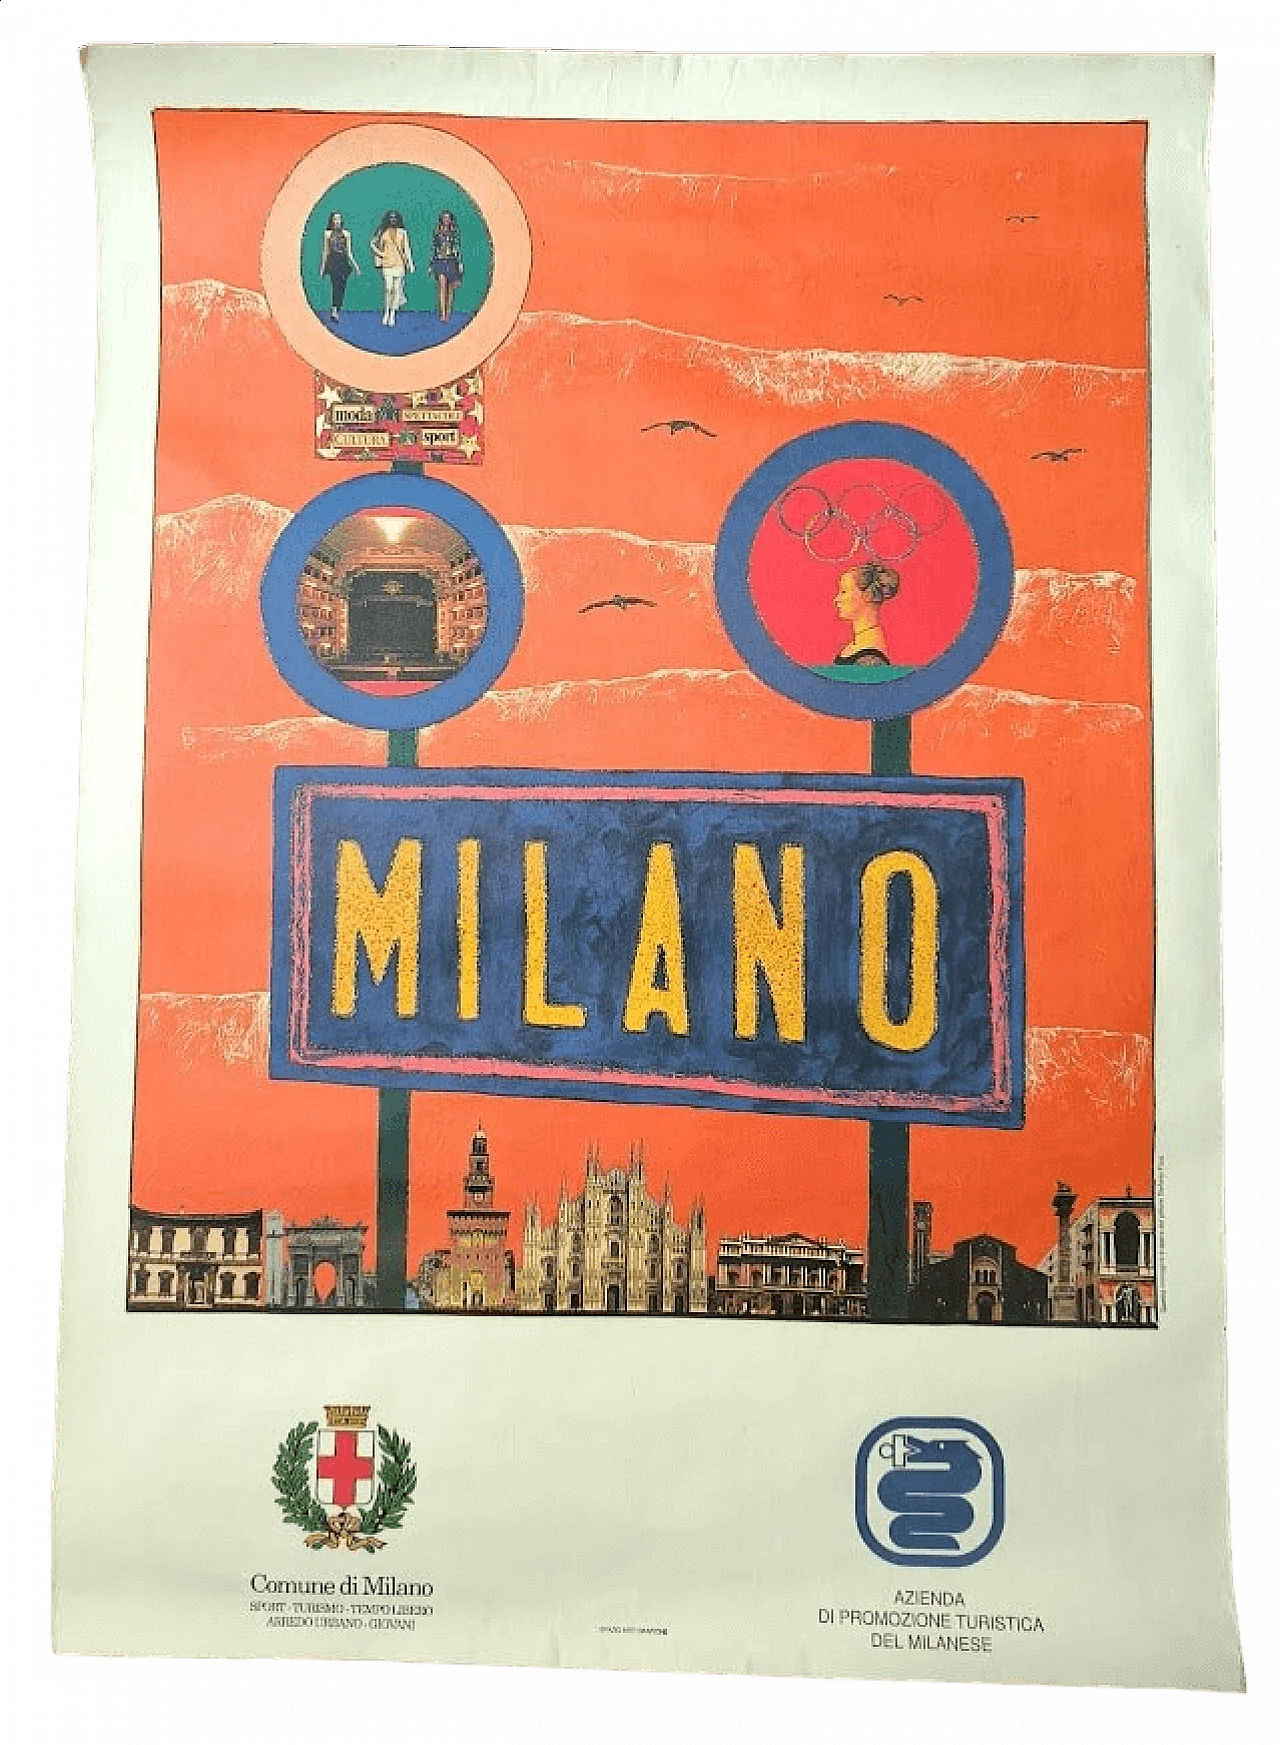 Stefano Pizzi, Milan tourism promotion poster, 1980s 12